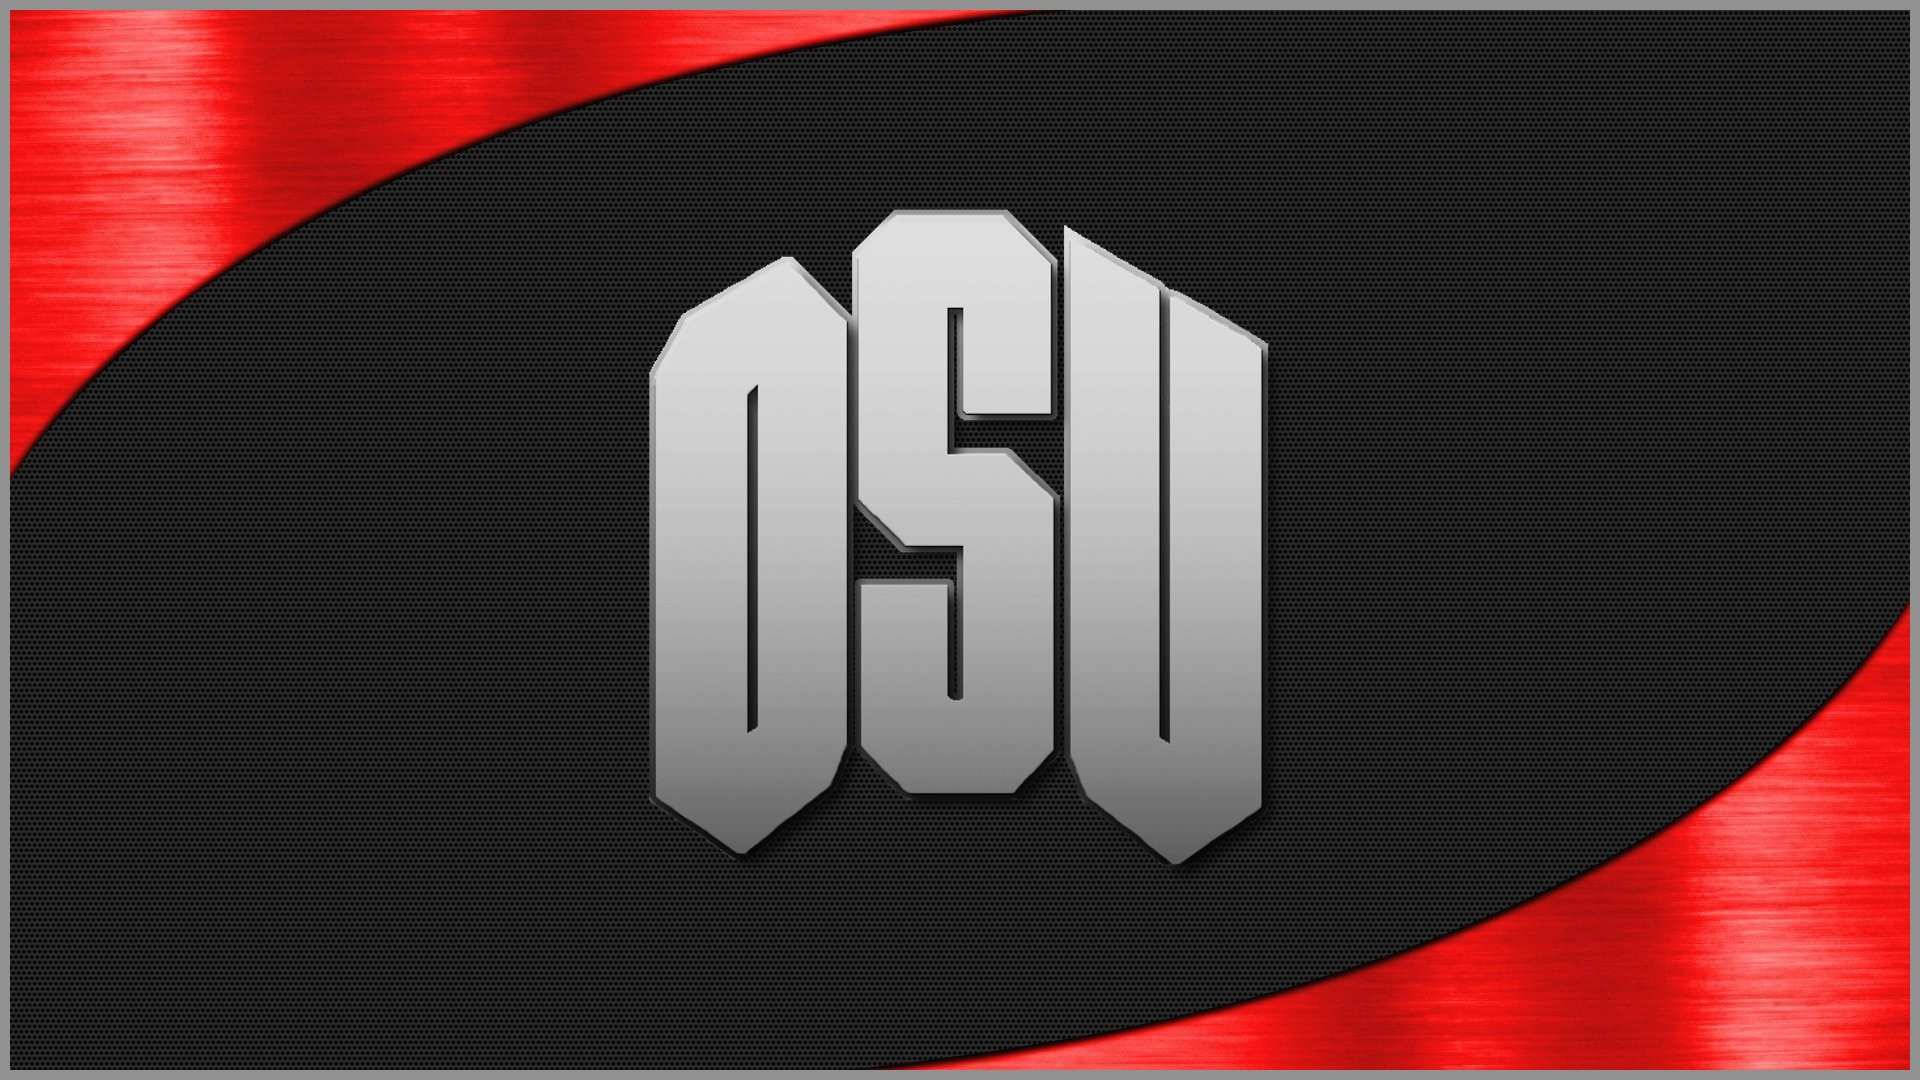 Ohio State University Logo Wallpaper